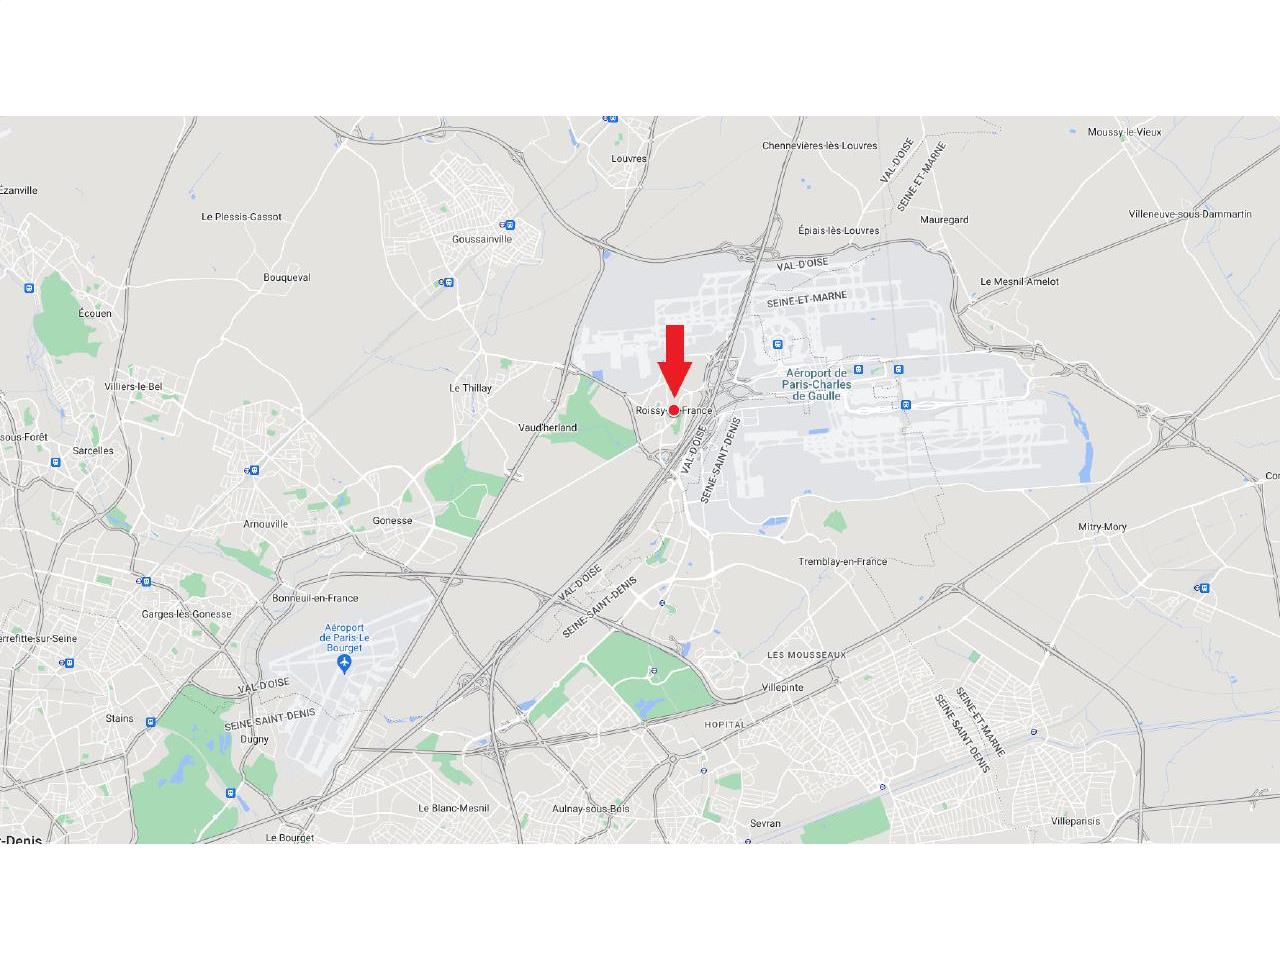 Location entrepôt classe b 17188m² Roissy-en-France